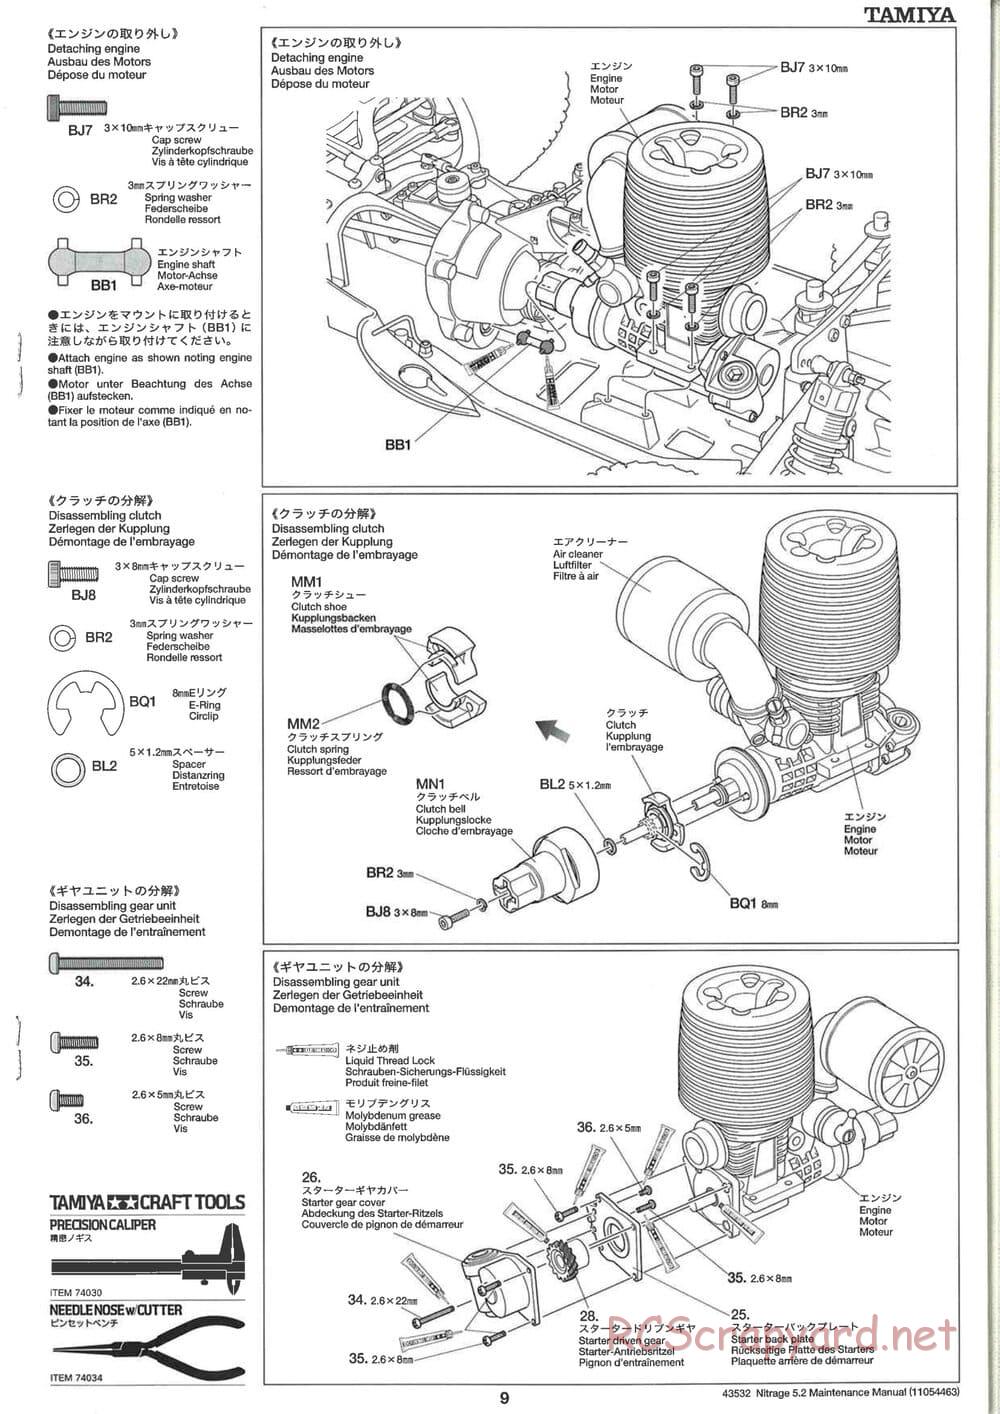 Tamiya - Nitrage 5.2 - Maintenance Manual - Page 9